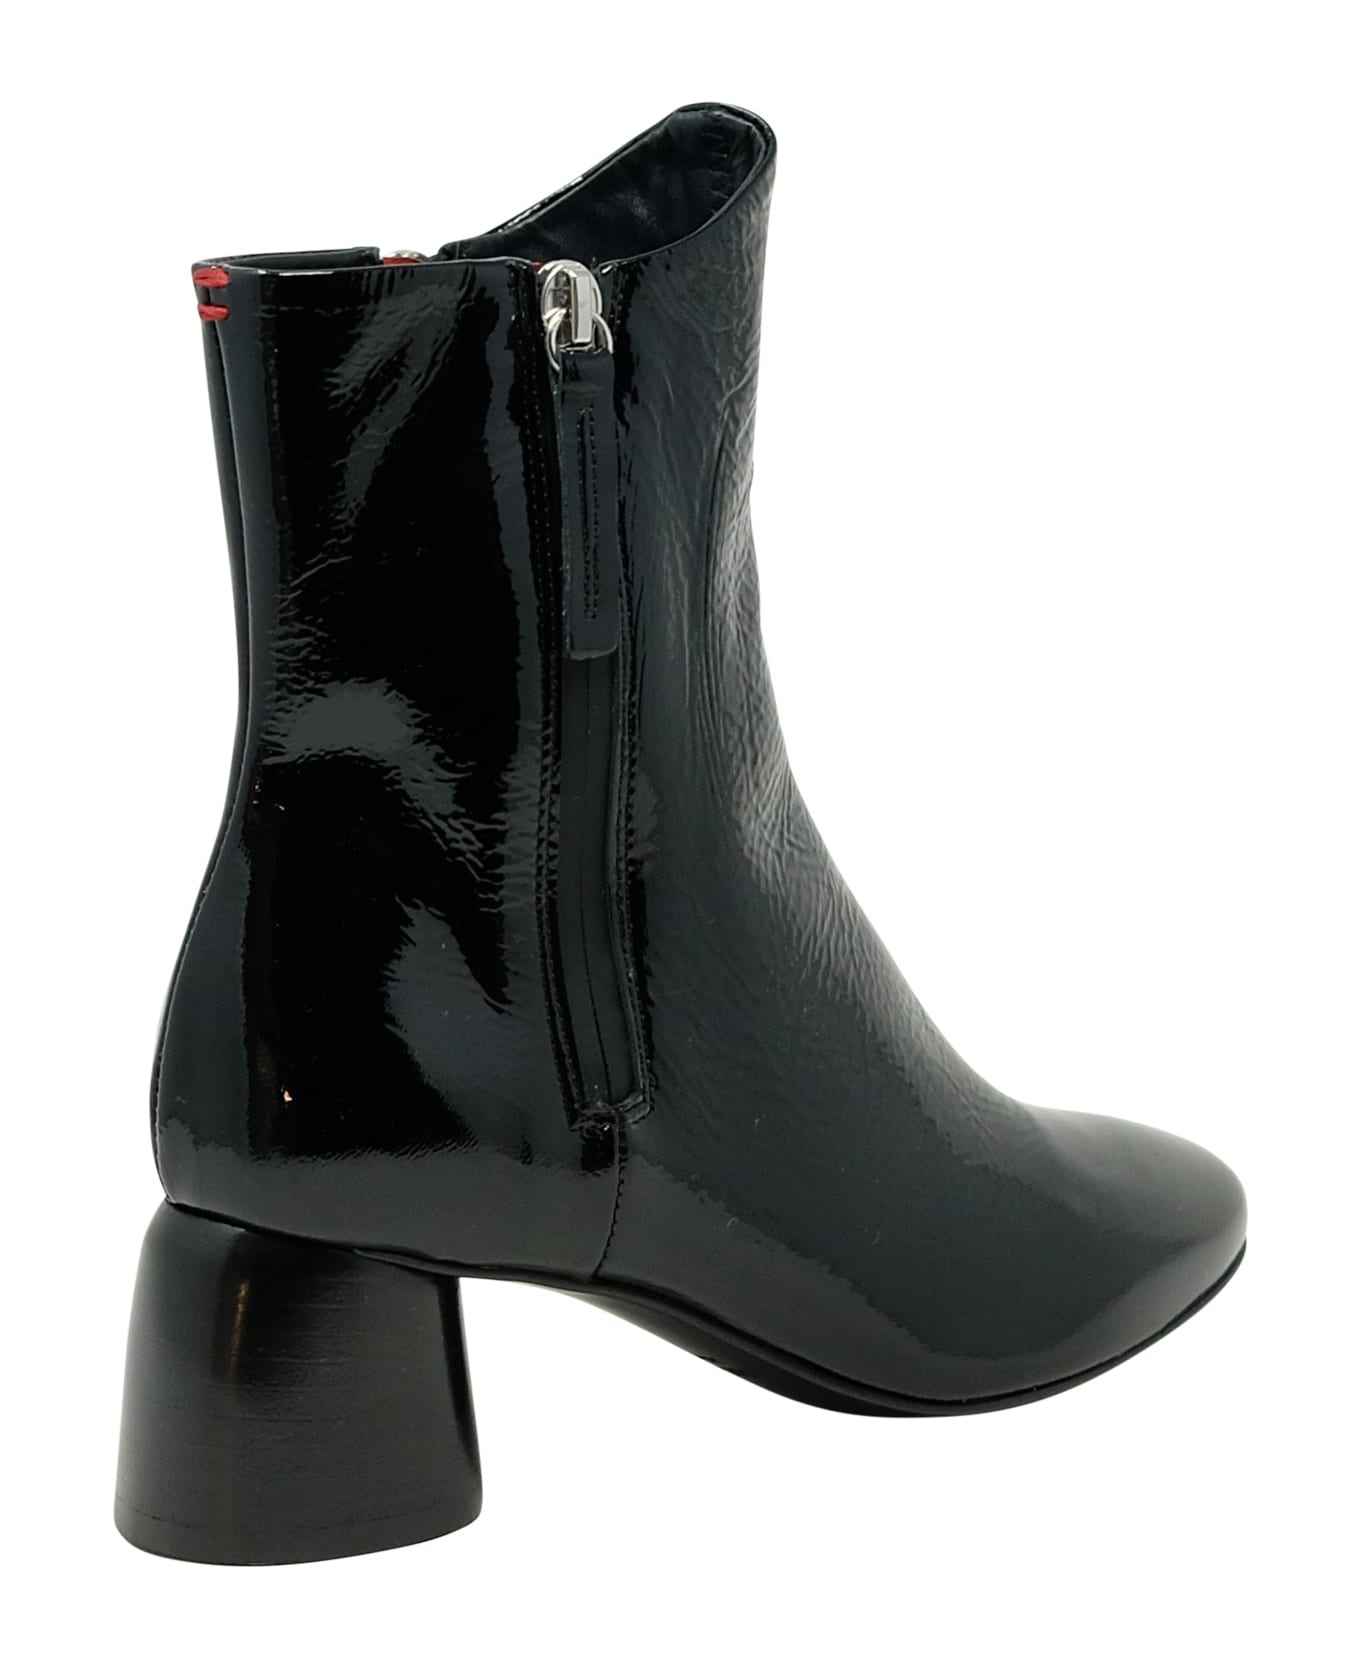 Halmanera Patent Leather Plum Ankle Boots